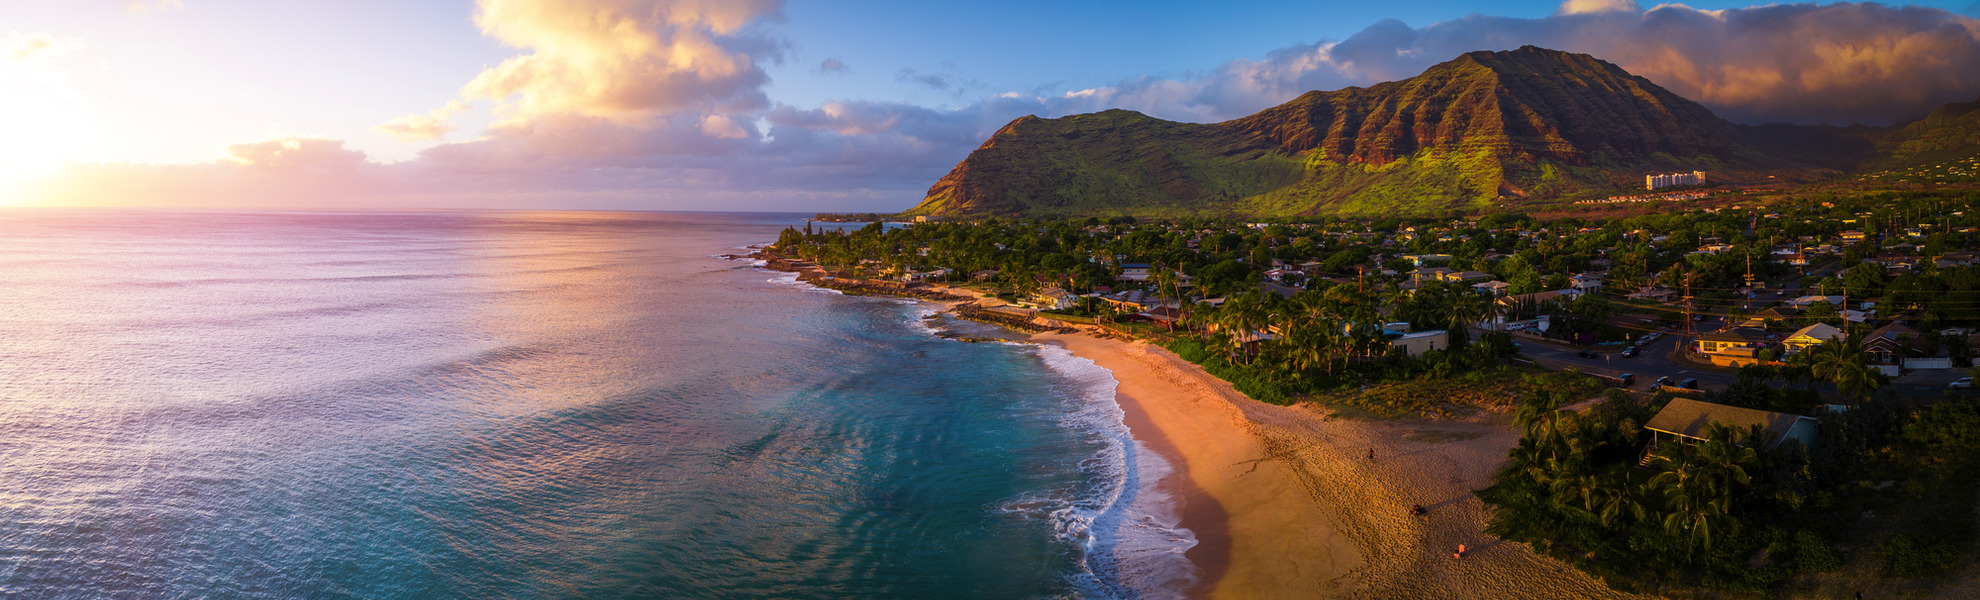 Papaoneone Strand auf Oahu, Hawaii